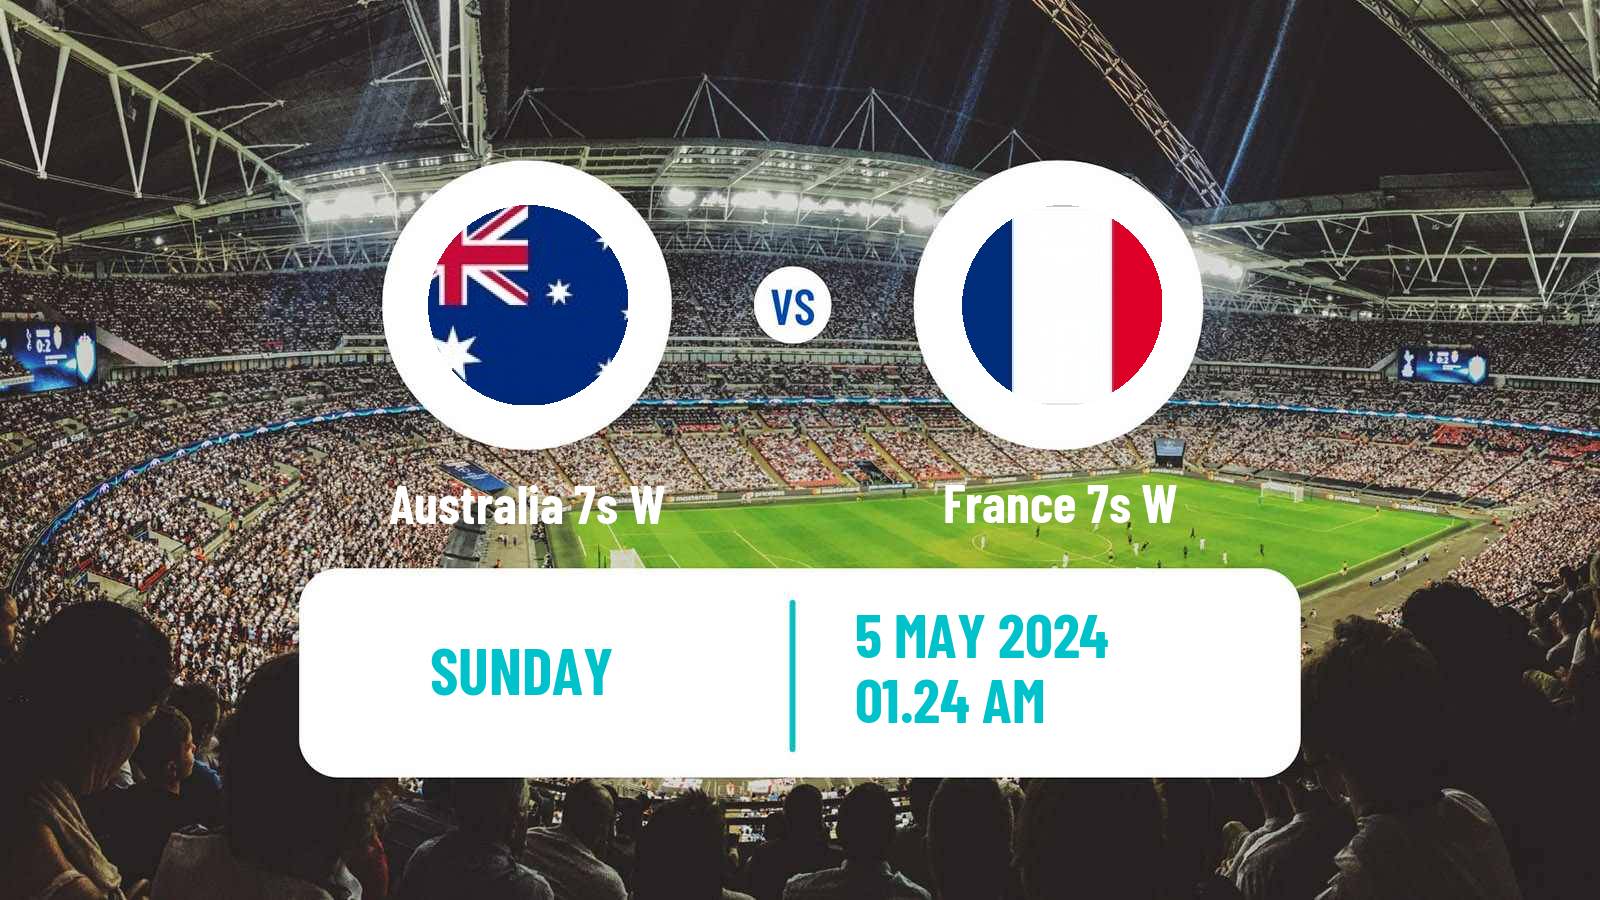 Soccer Sevens World Series Women - Singapore Australia 7s W - France 7s W